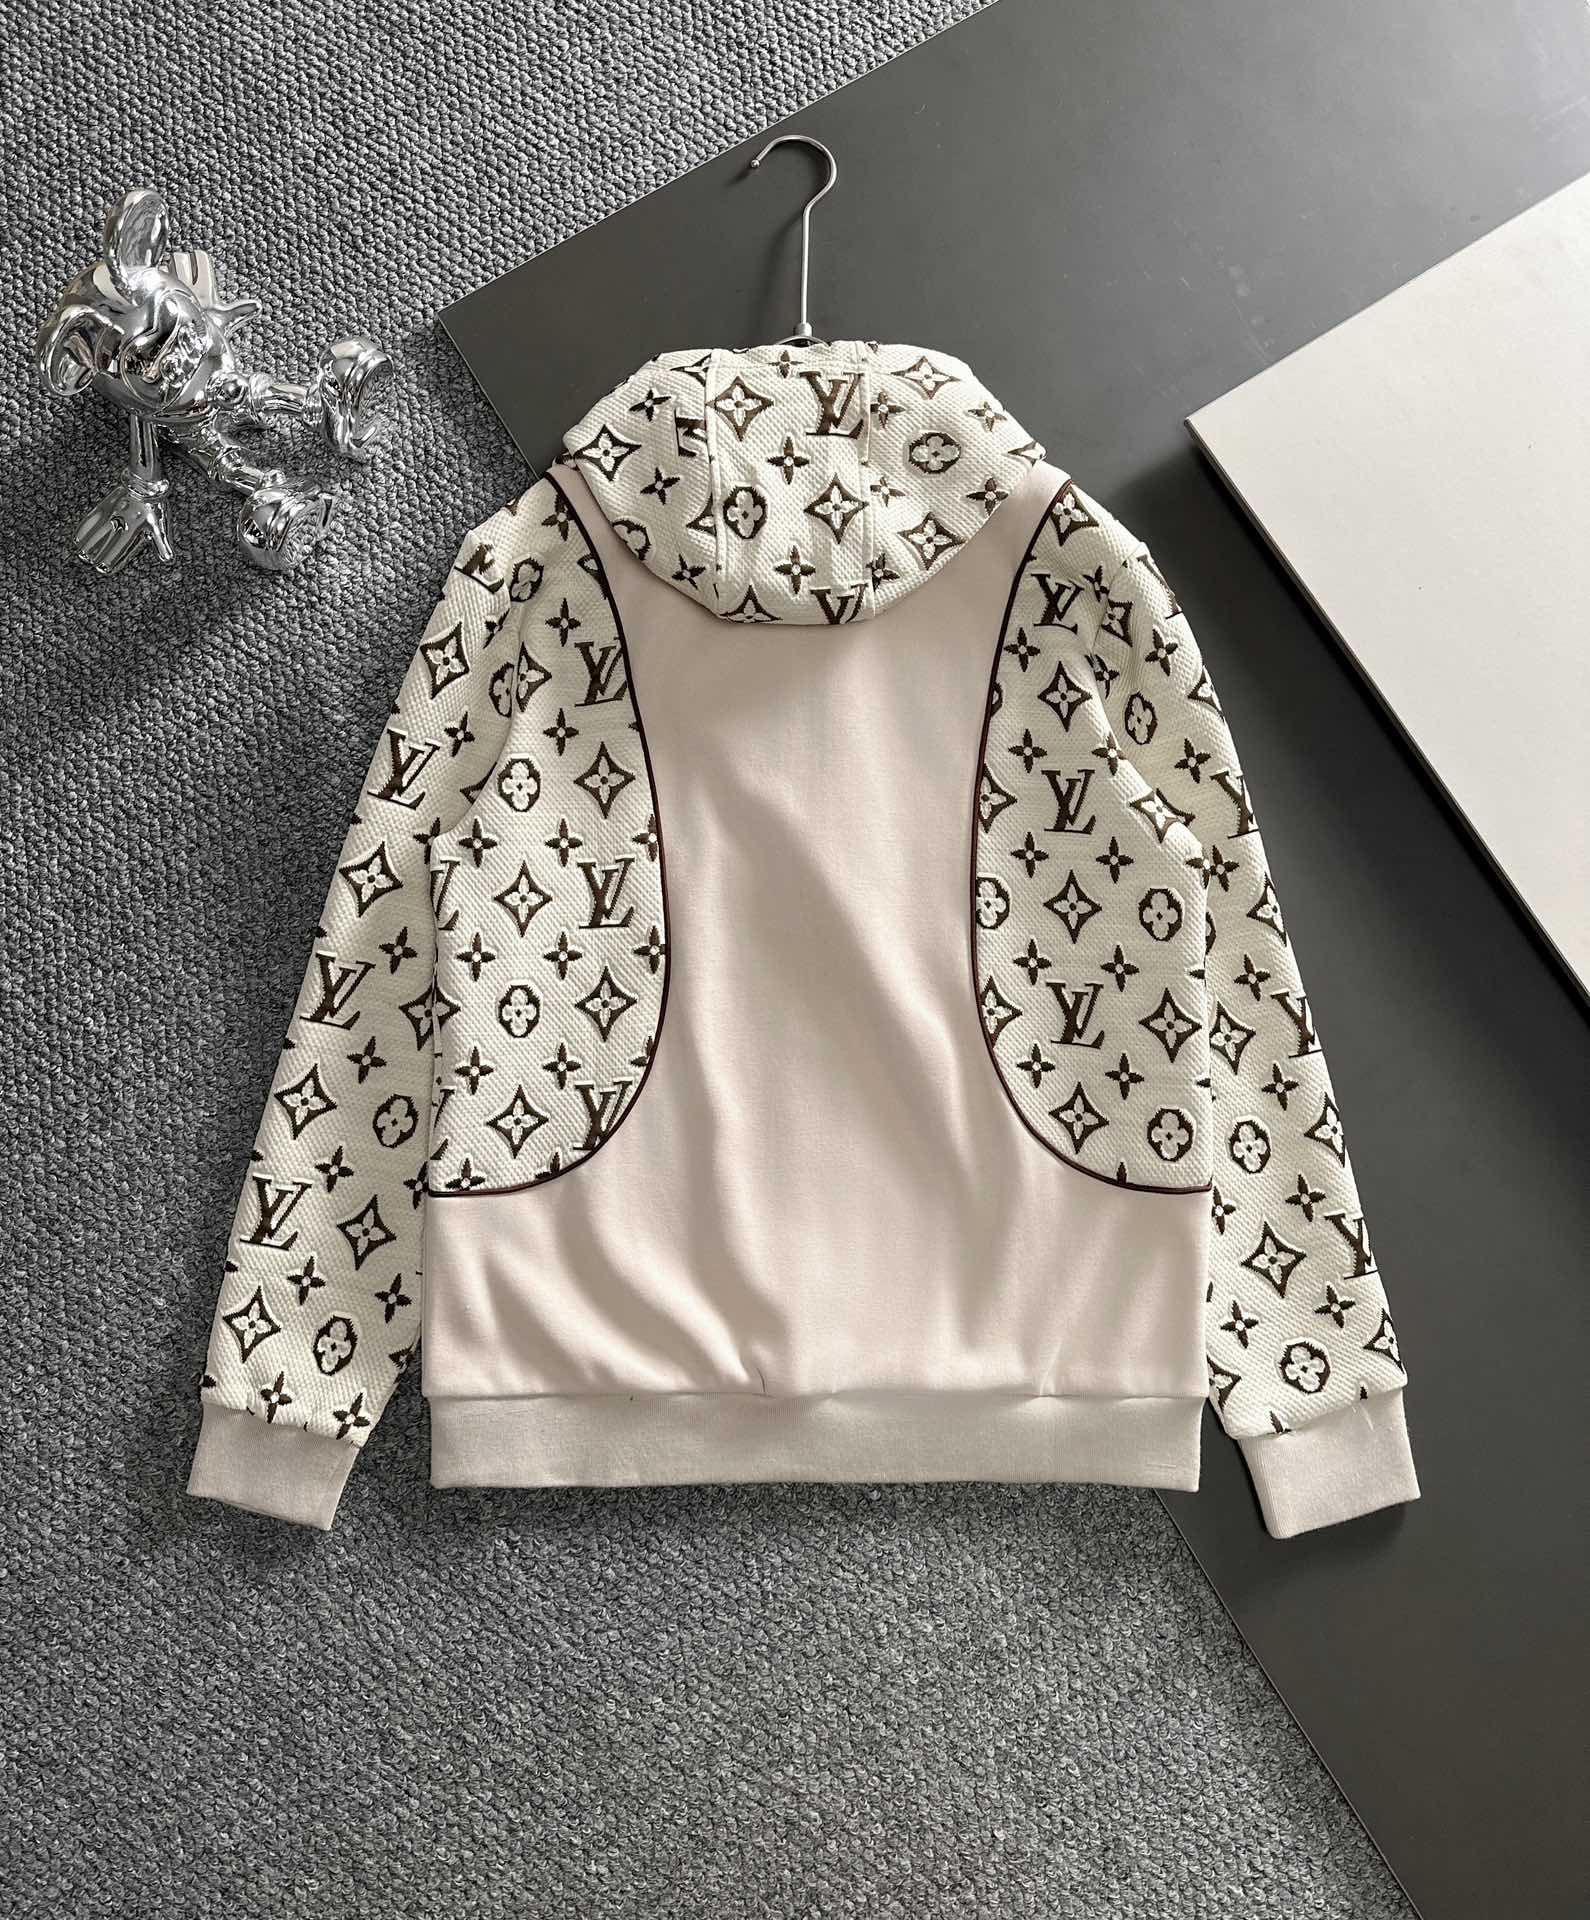 Louis Vuitton Cotton Blend Tracksuits Unisex # 274282, cheap LV Tracksuits, only $76!